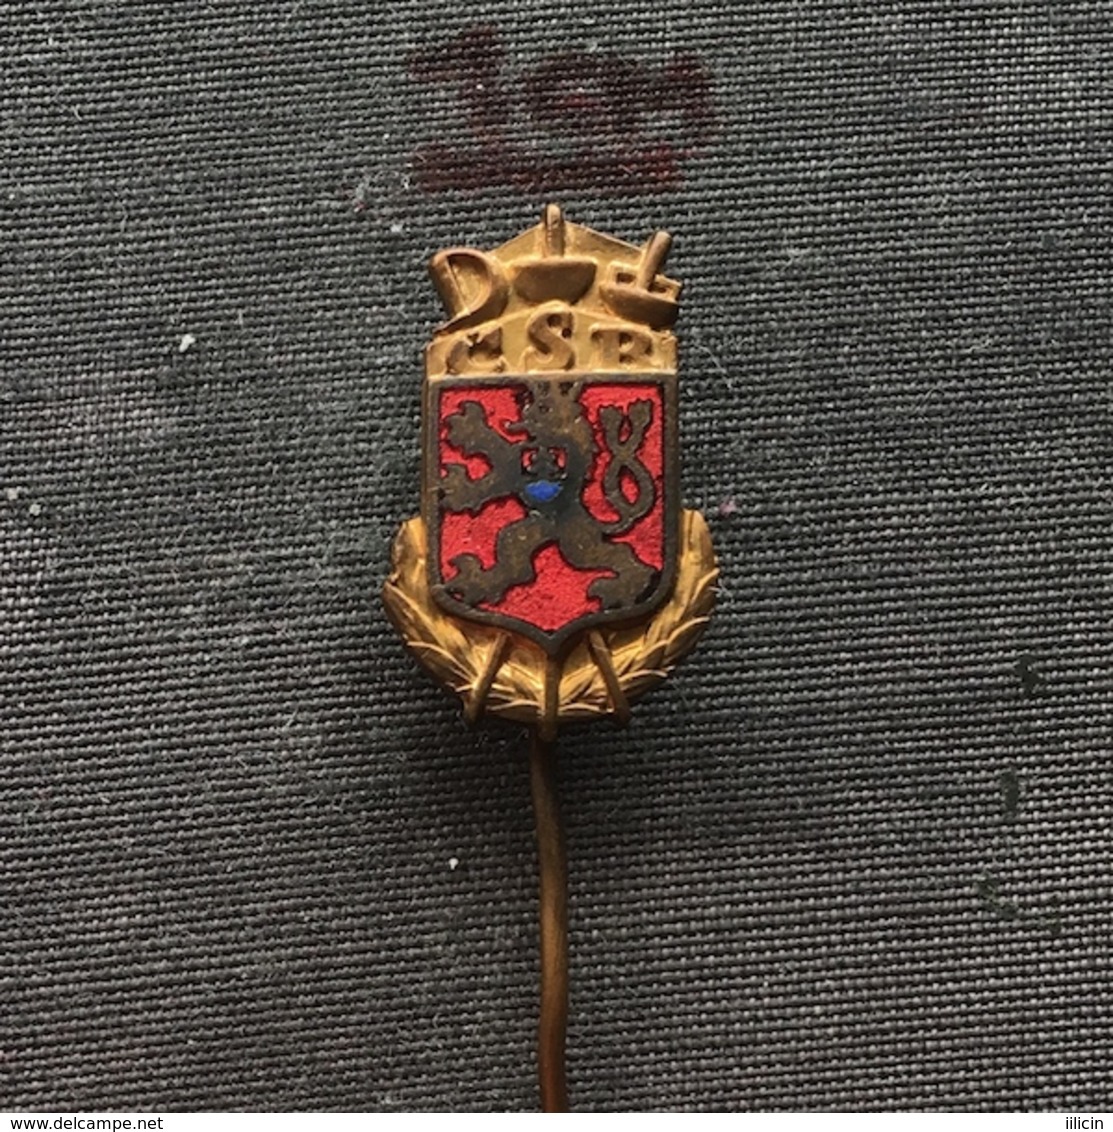 Badge (Pin) ZN006657 - Fencing (Fechten / Macevanje) Czechoslovakia Federation / Association / Union - Esgrima